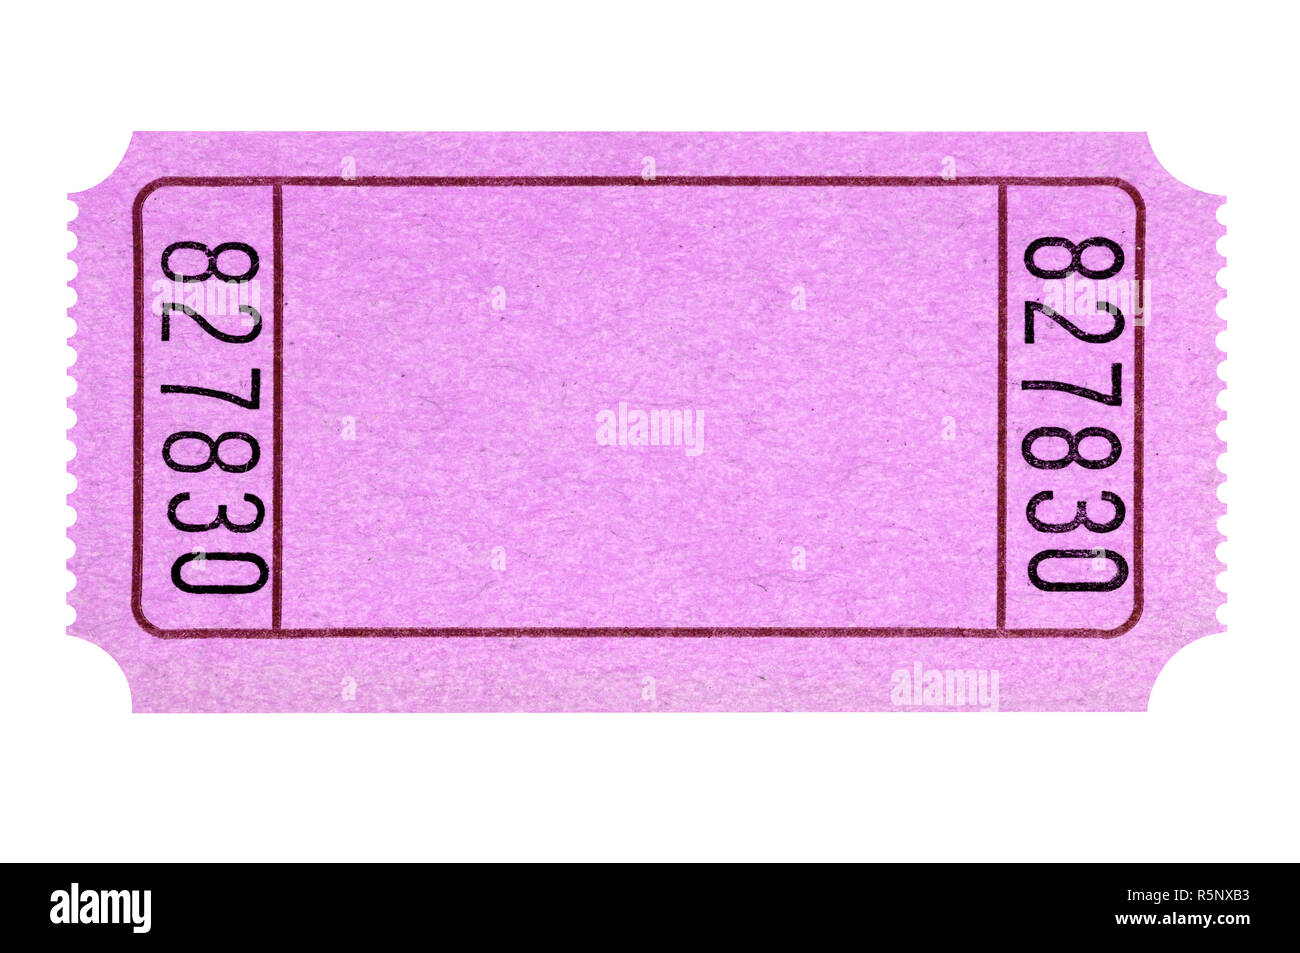 Blank pink movie or raffle ticket stub isolated Stock Photo